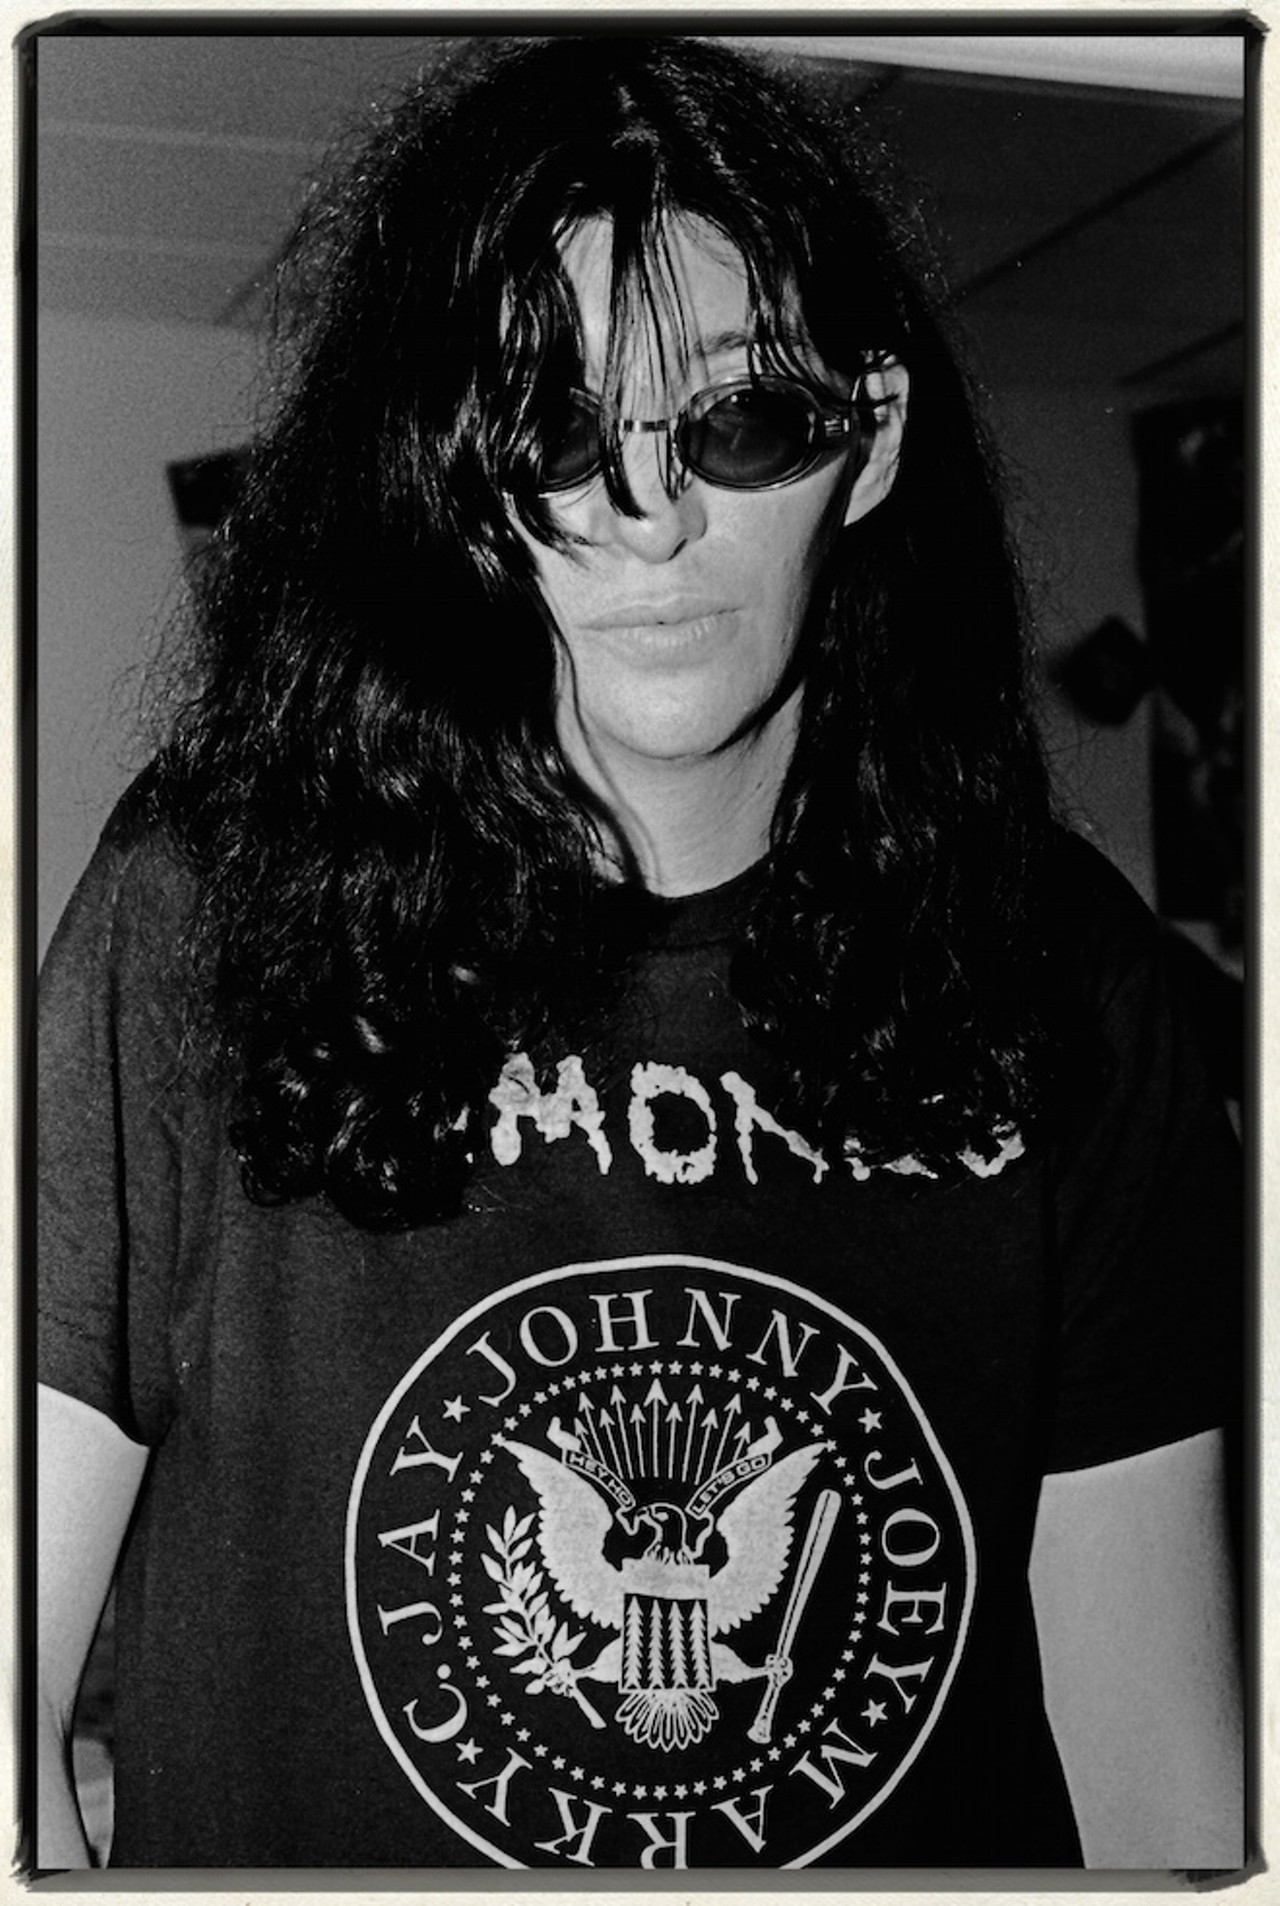 Joey Ramone at Murmur Records (1990)